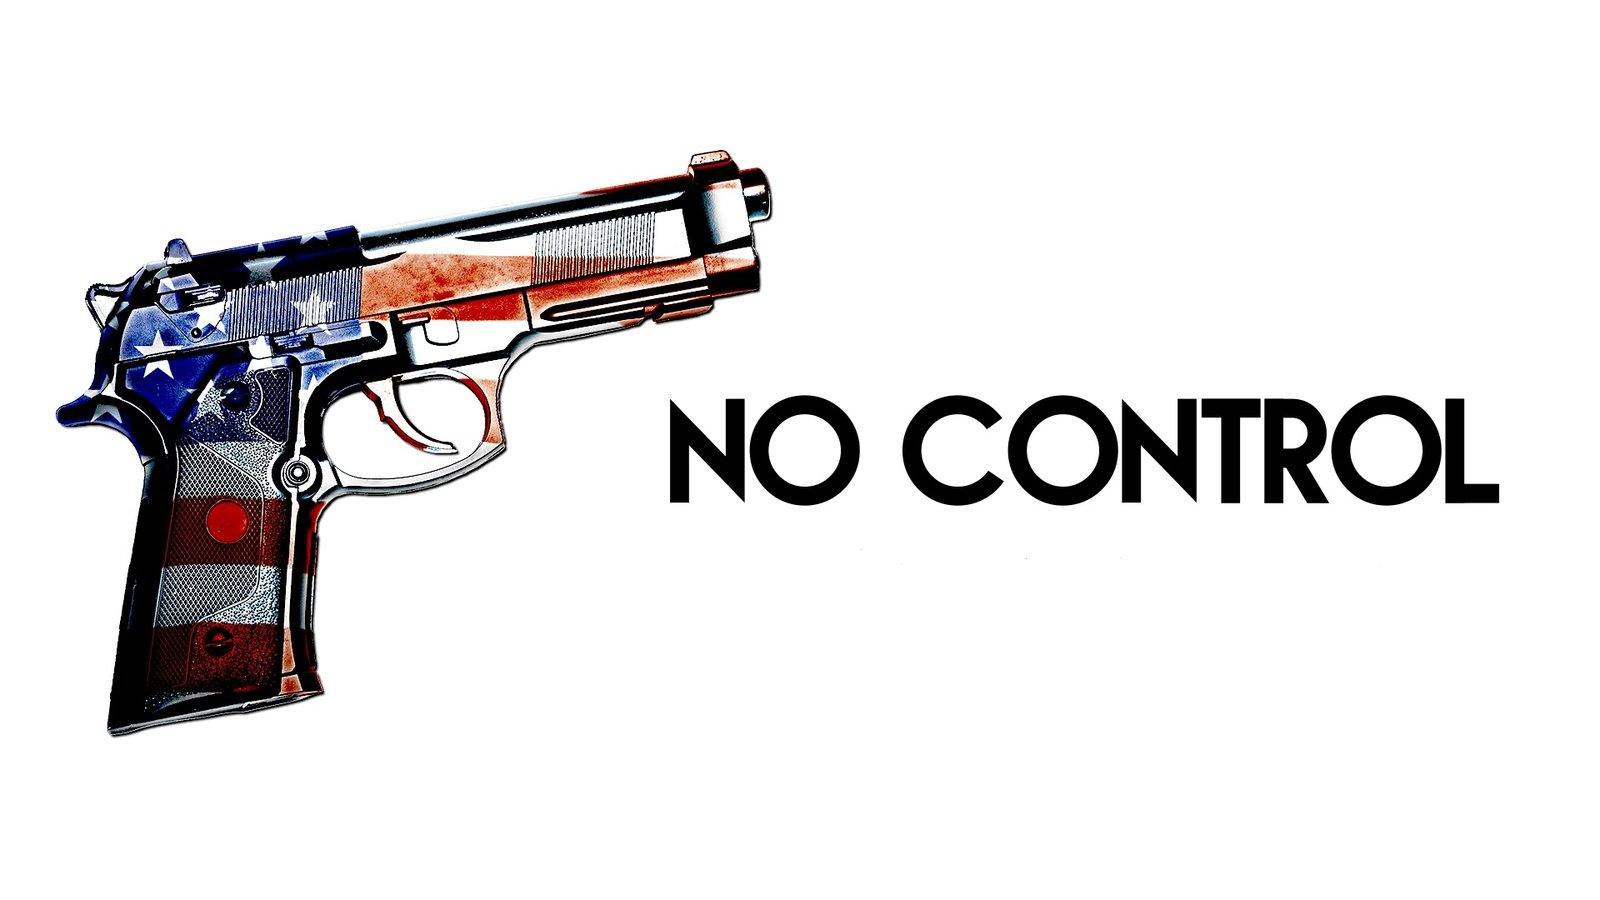 No Control - The Debate Over Gun Control in America